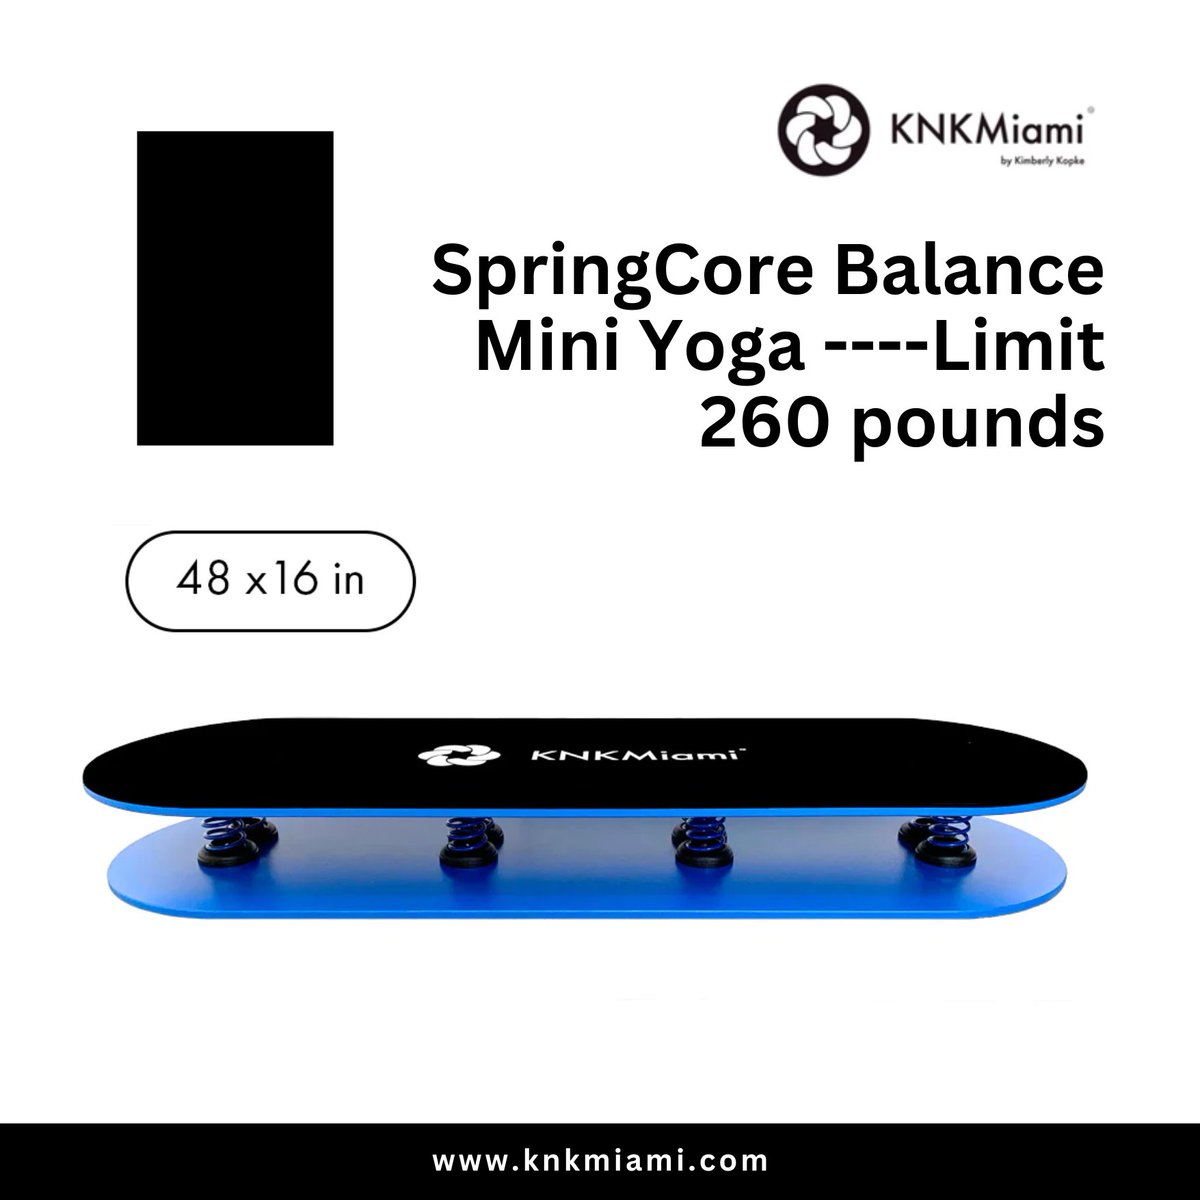 SpringCore Balance Mini Yoga ----Limit 260 pounds

#springcorebalanceminiyoga #knkmiami #miniyoga #activewear #fitnessgear #workoutaccessory #yogatool #springcorecollection #limit260pounds #shopknkmiami

💥Visit Us: knkmiami.com/collections/al…